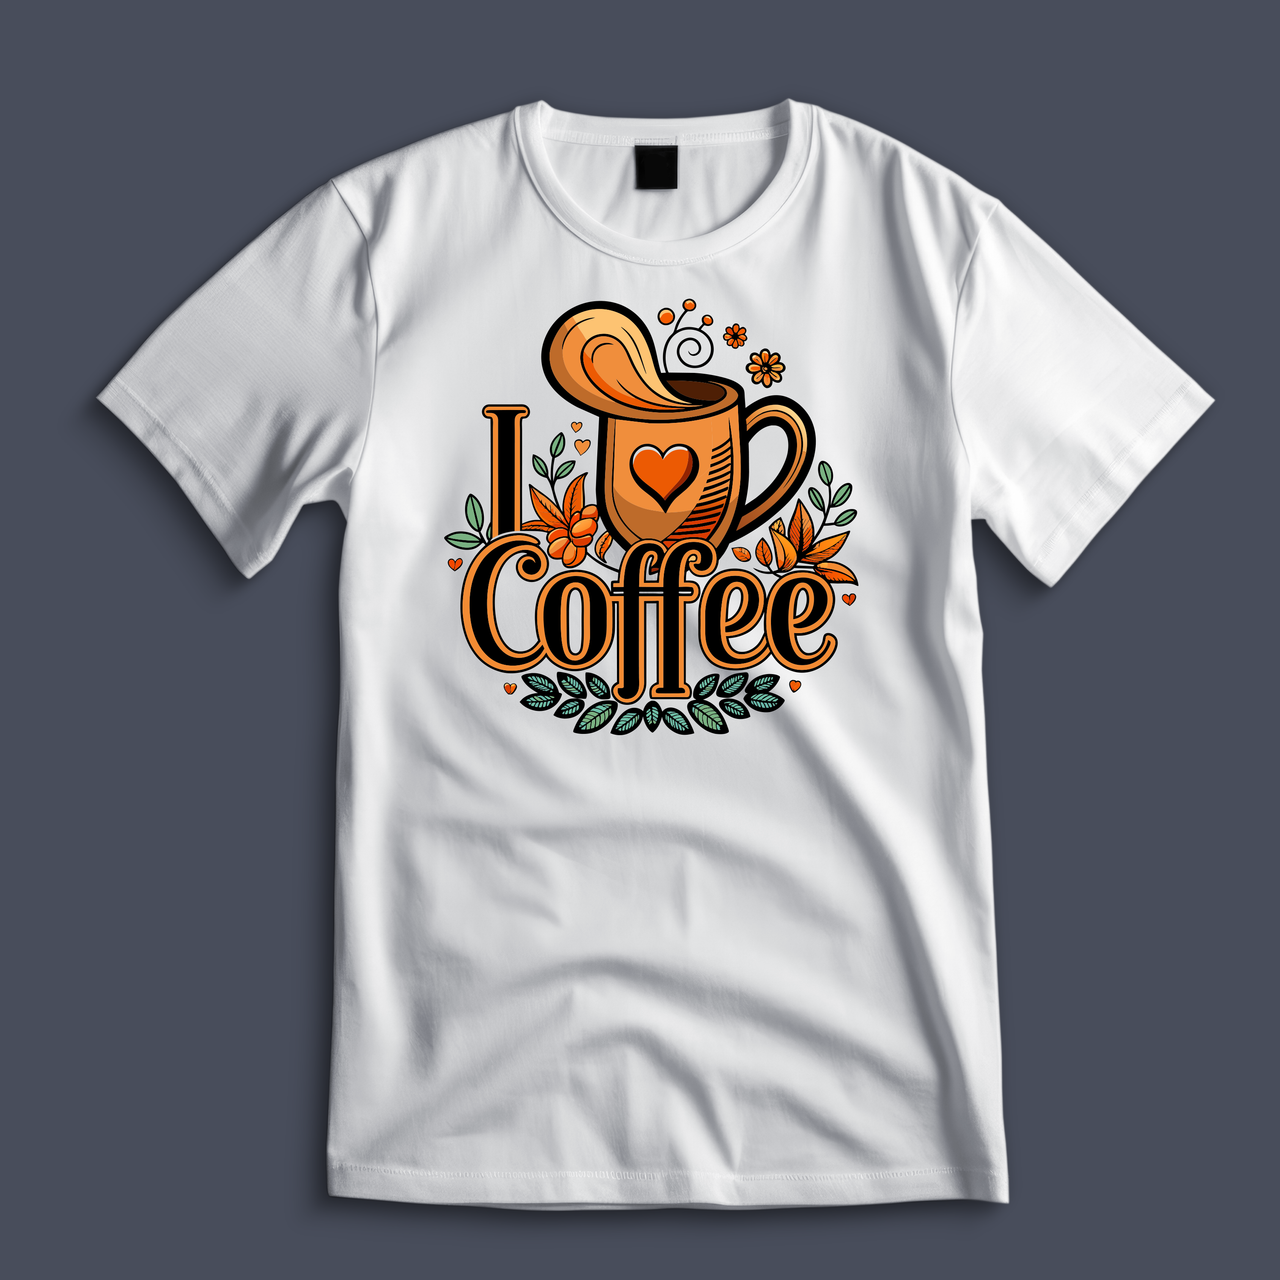 "I Love Coffee" T-shirt!